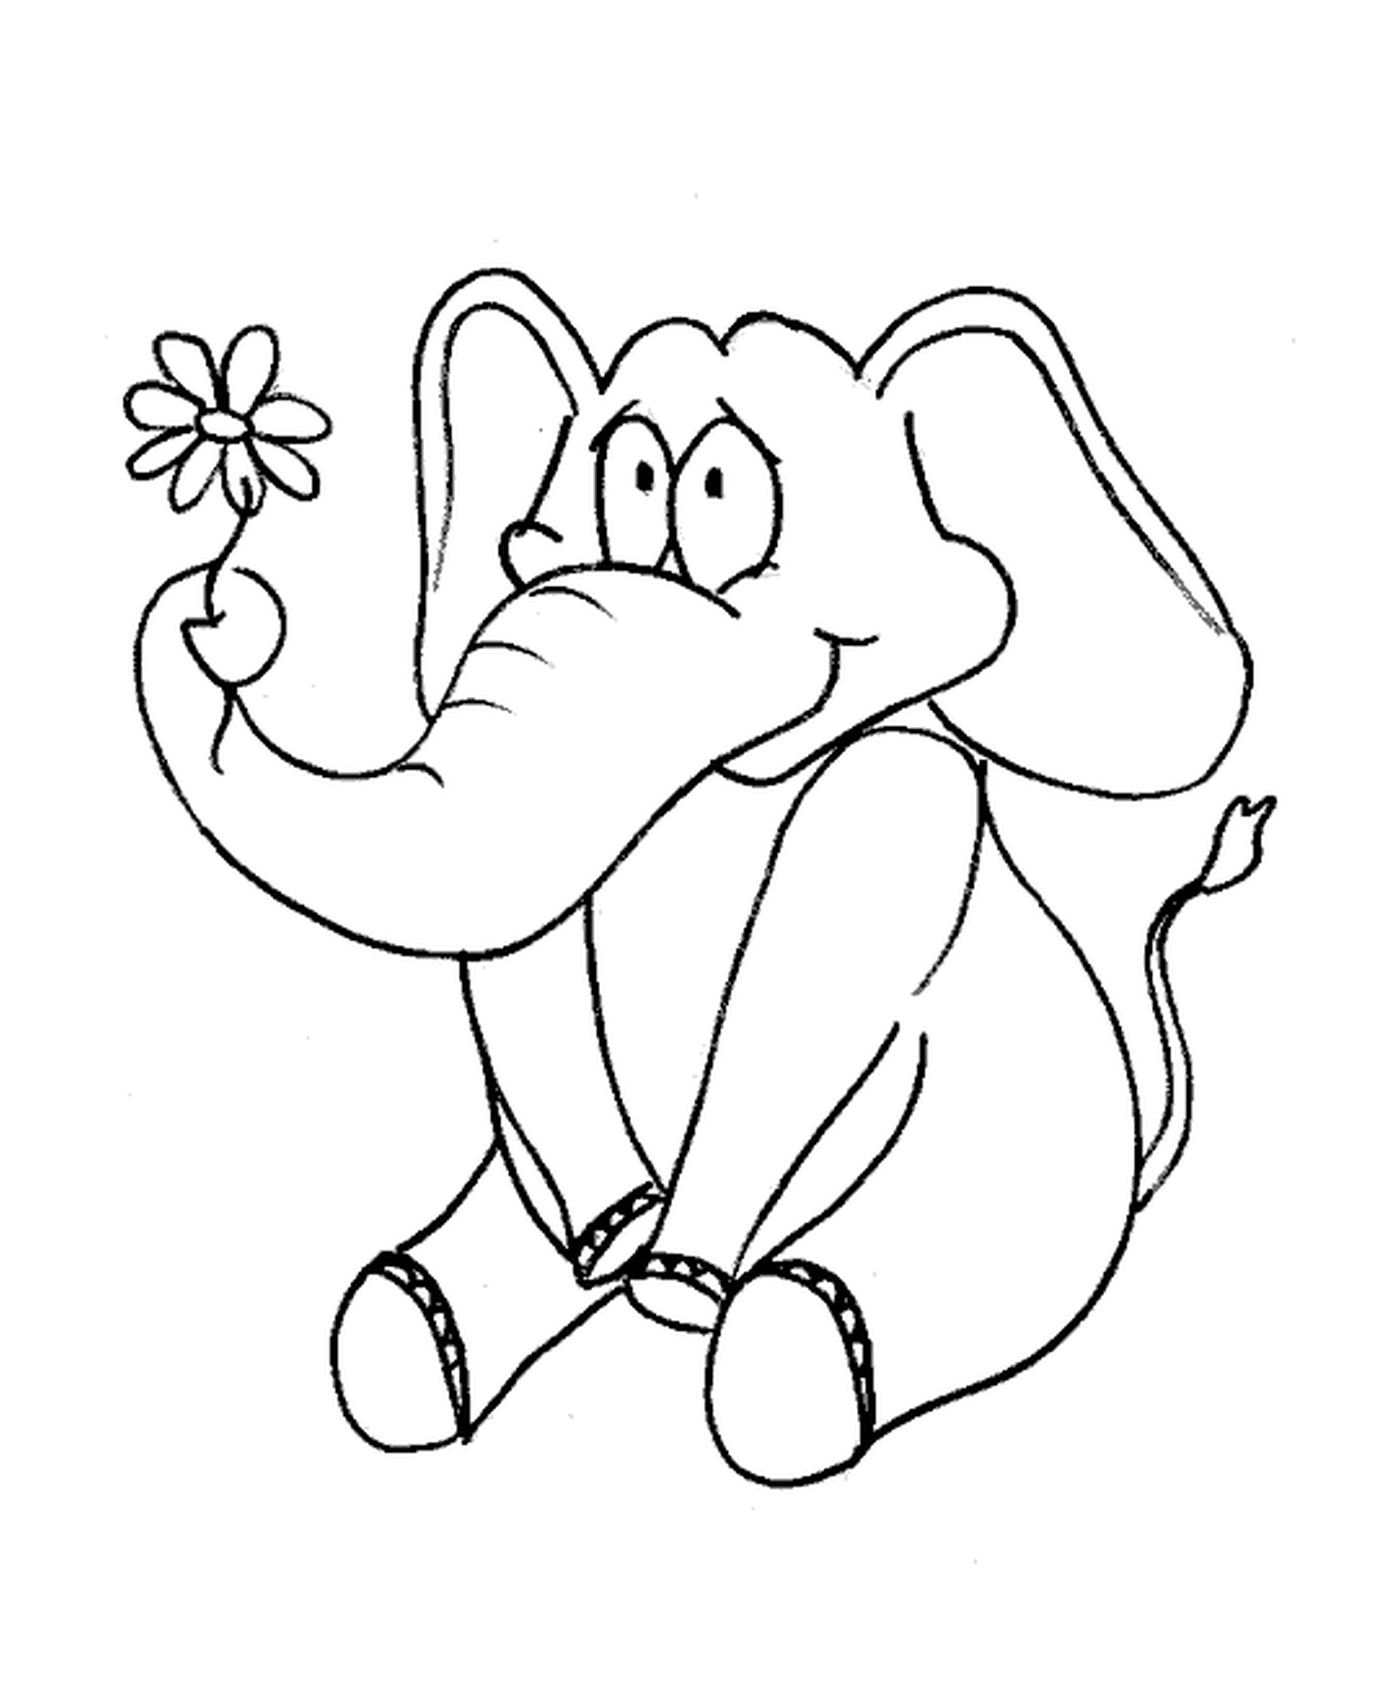  An elephant holding a flower 